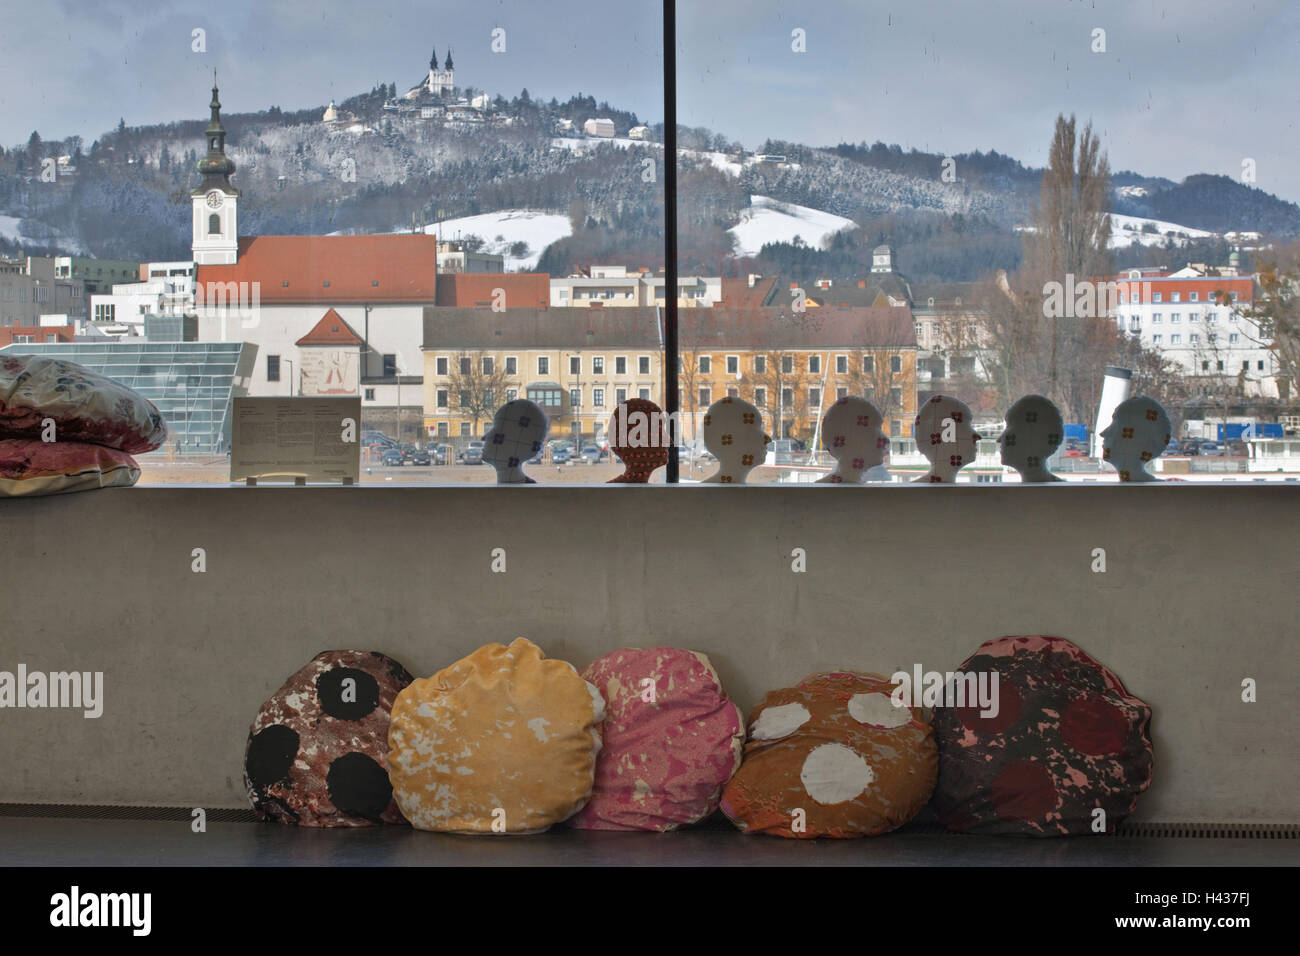 Austria, Austria superiore, Linz, Museo Lentos, finestra frontale, vista città, inverno, Foto Stock